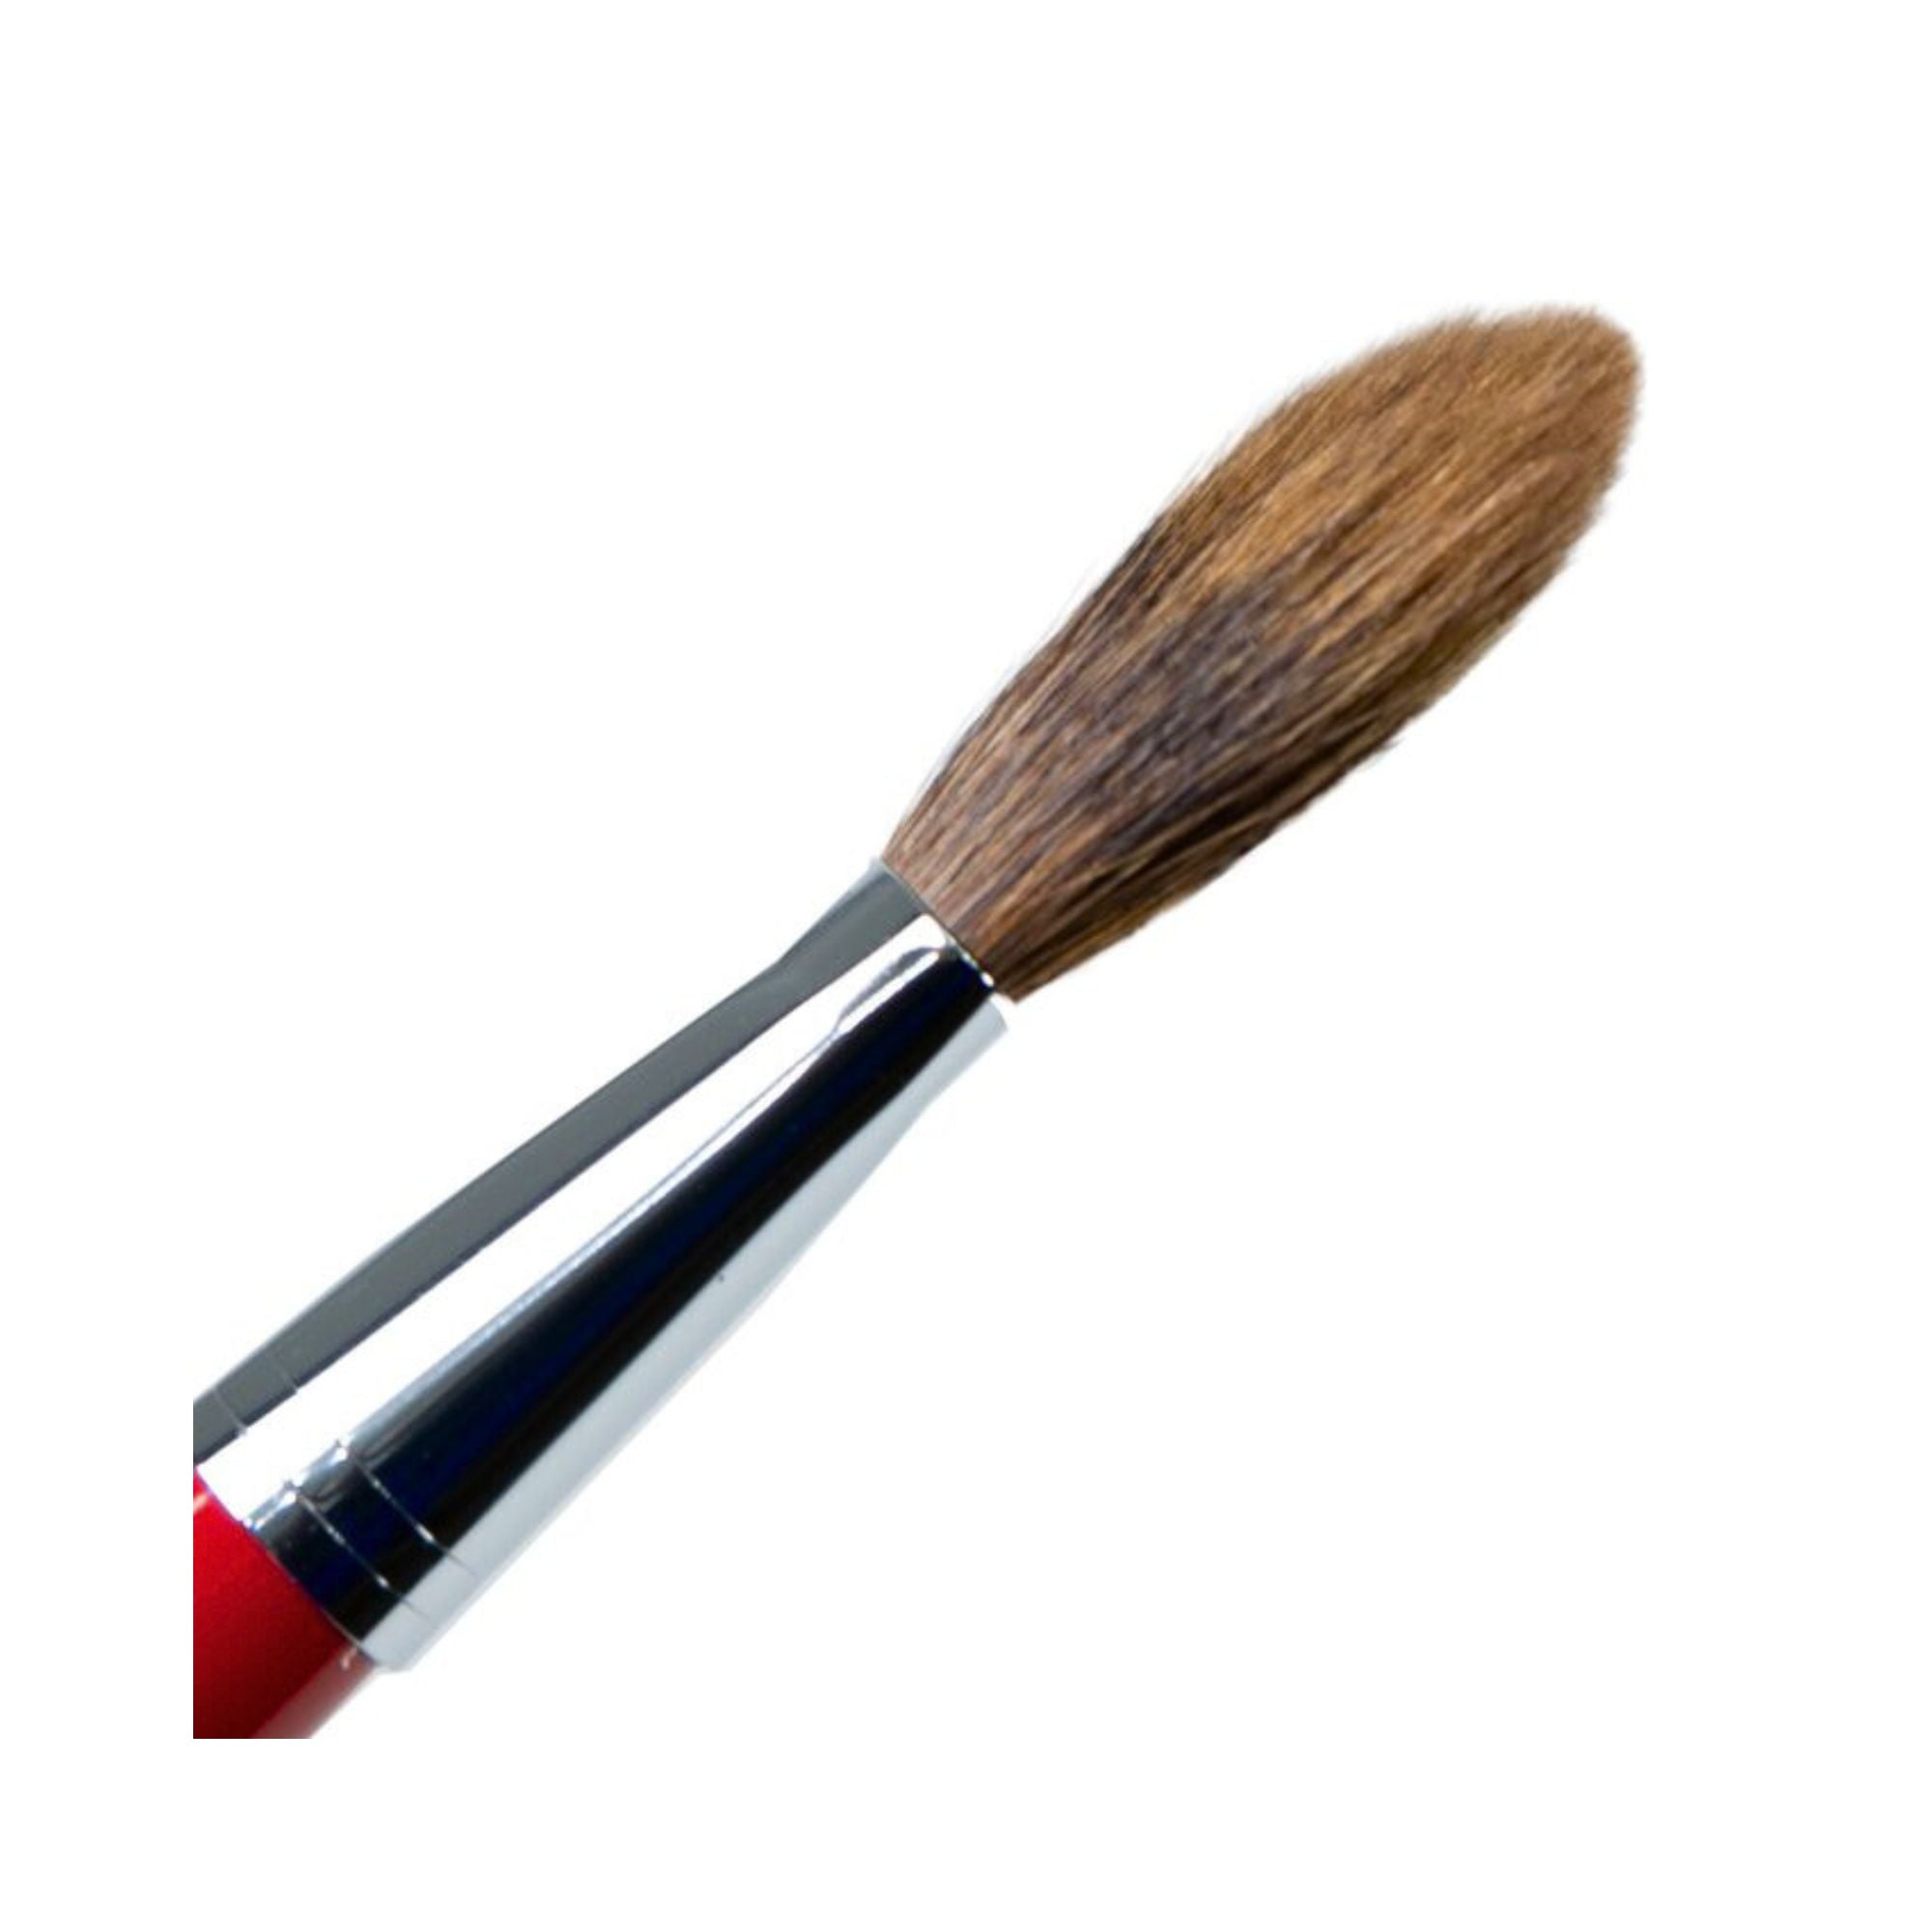 Tanseido CQ 14SP Eyeshadow Brush - Fude Beauty, Japanese Makeup Brushes